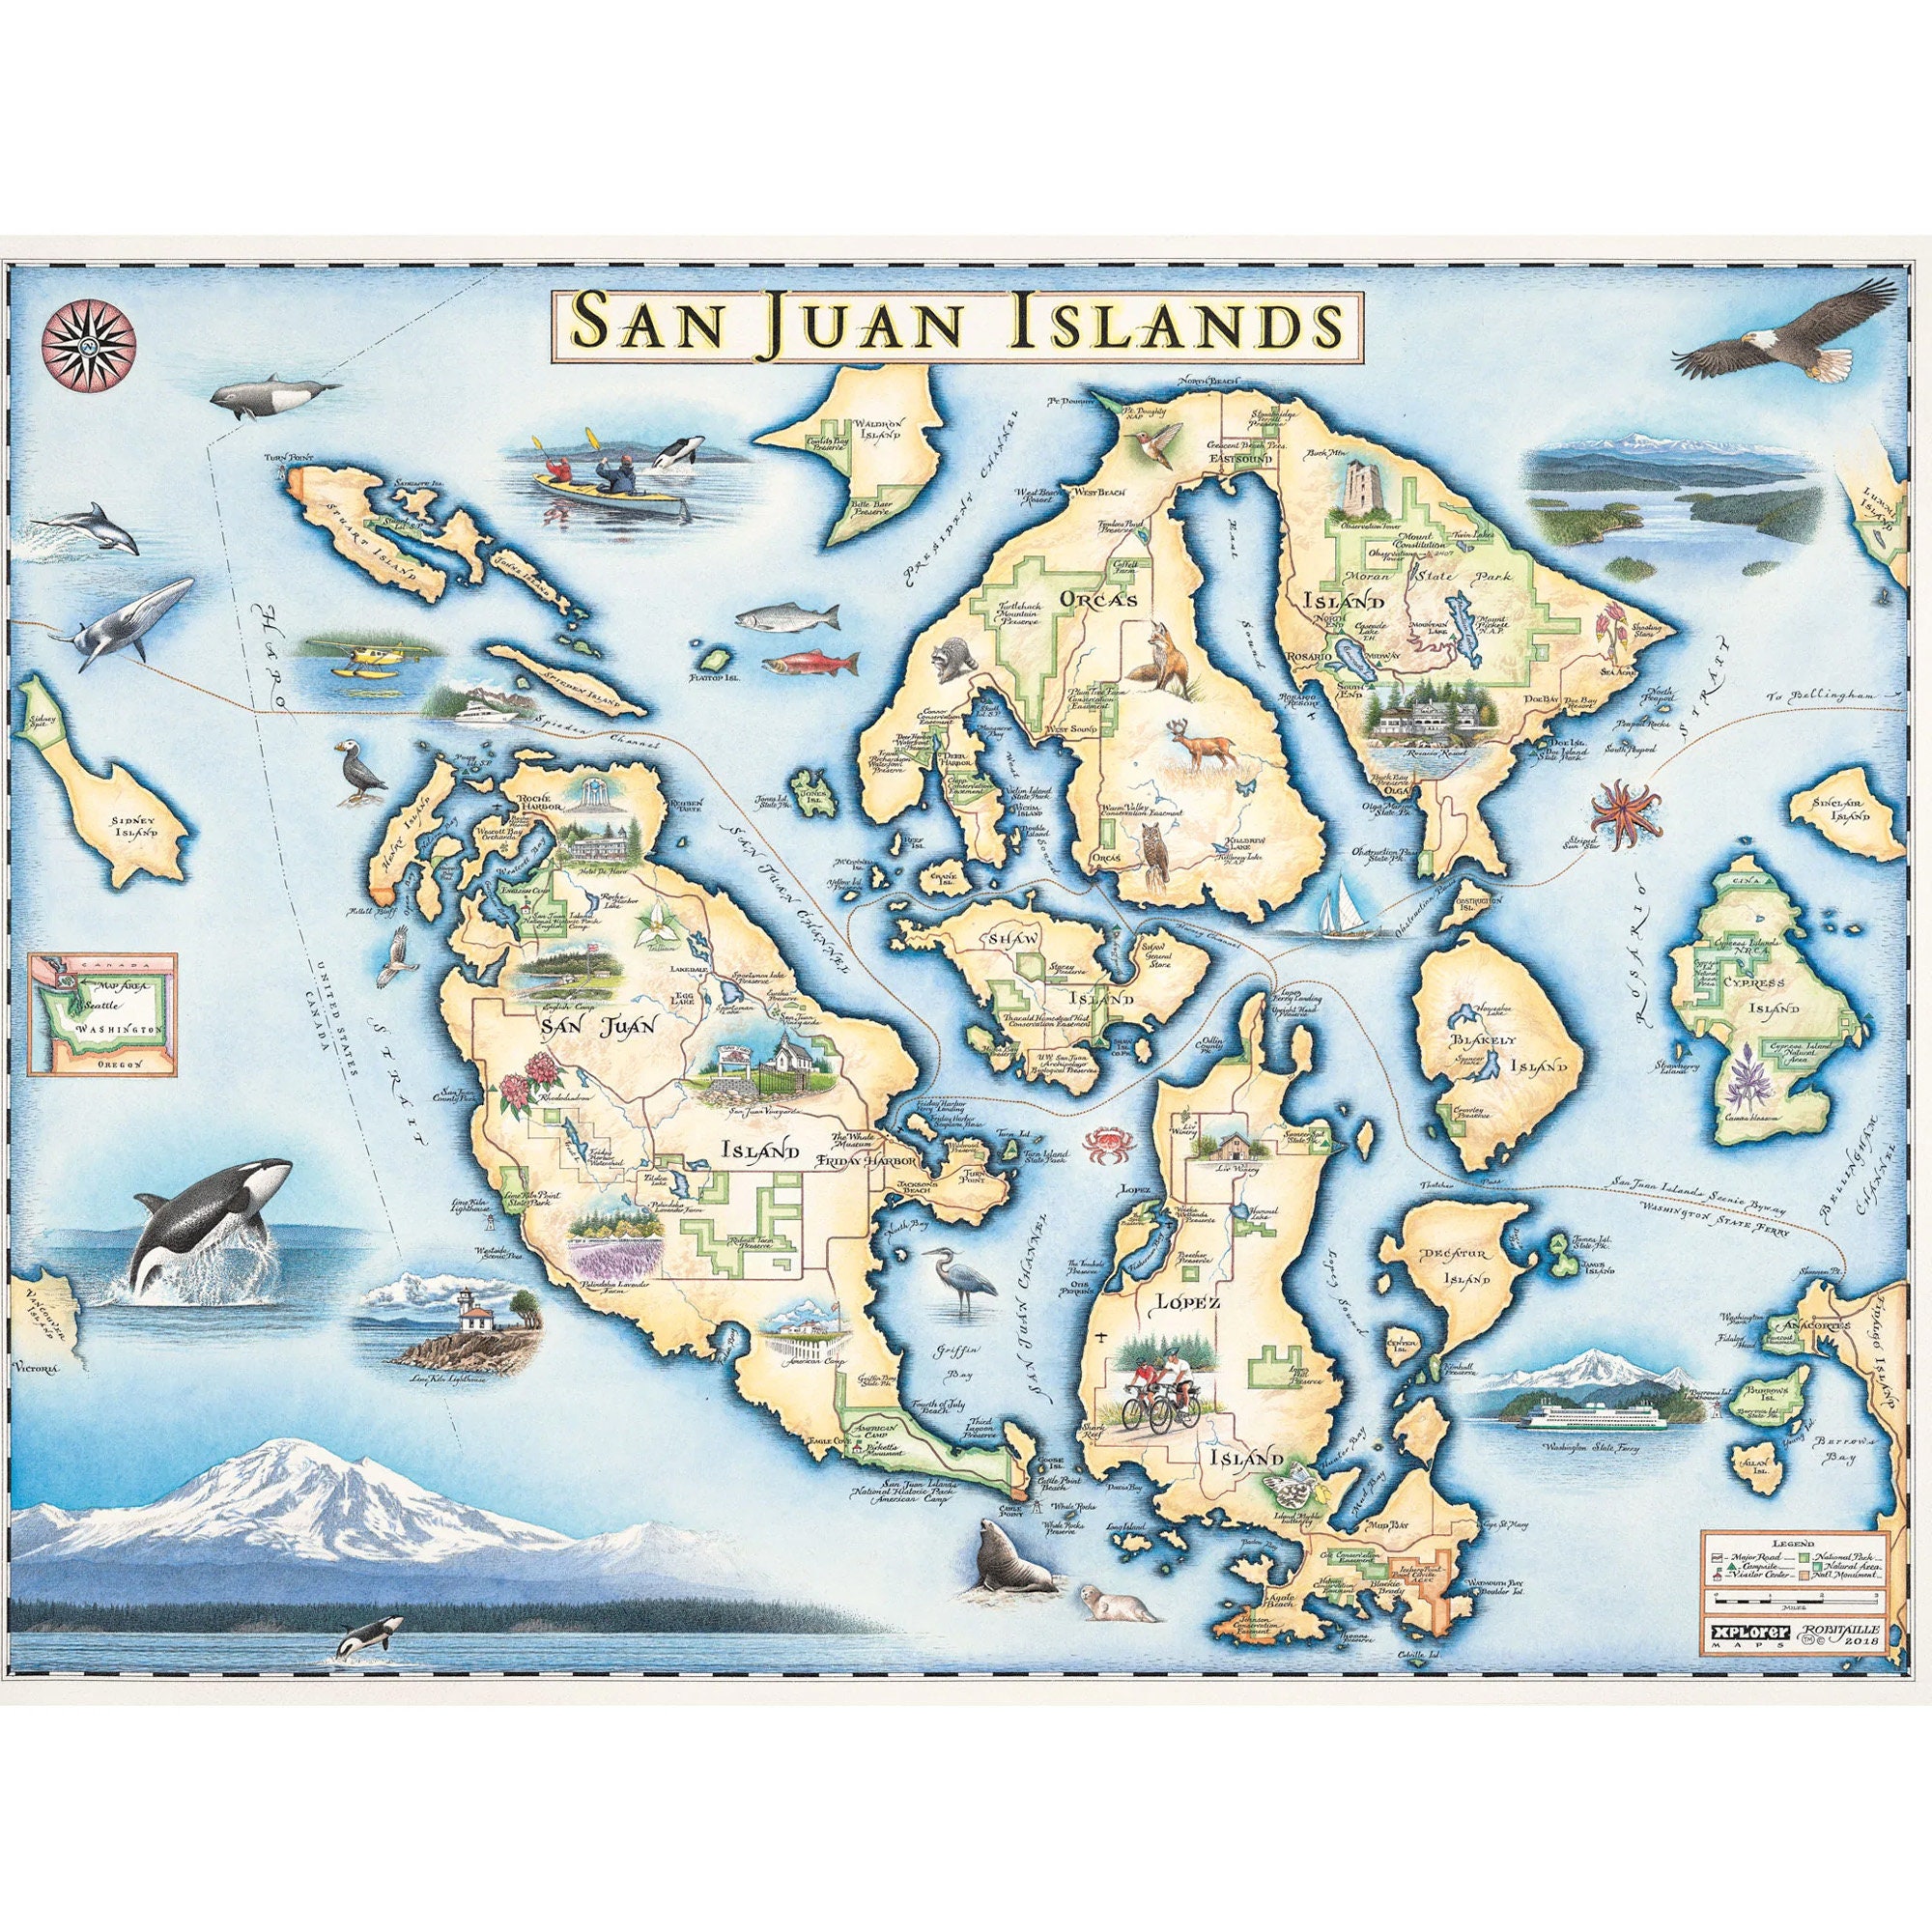 San juan islands for sale  